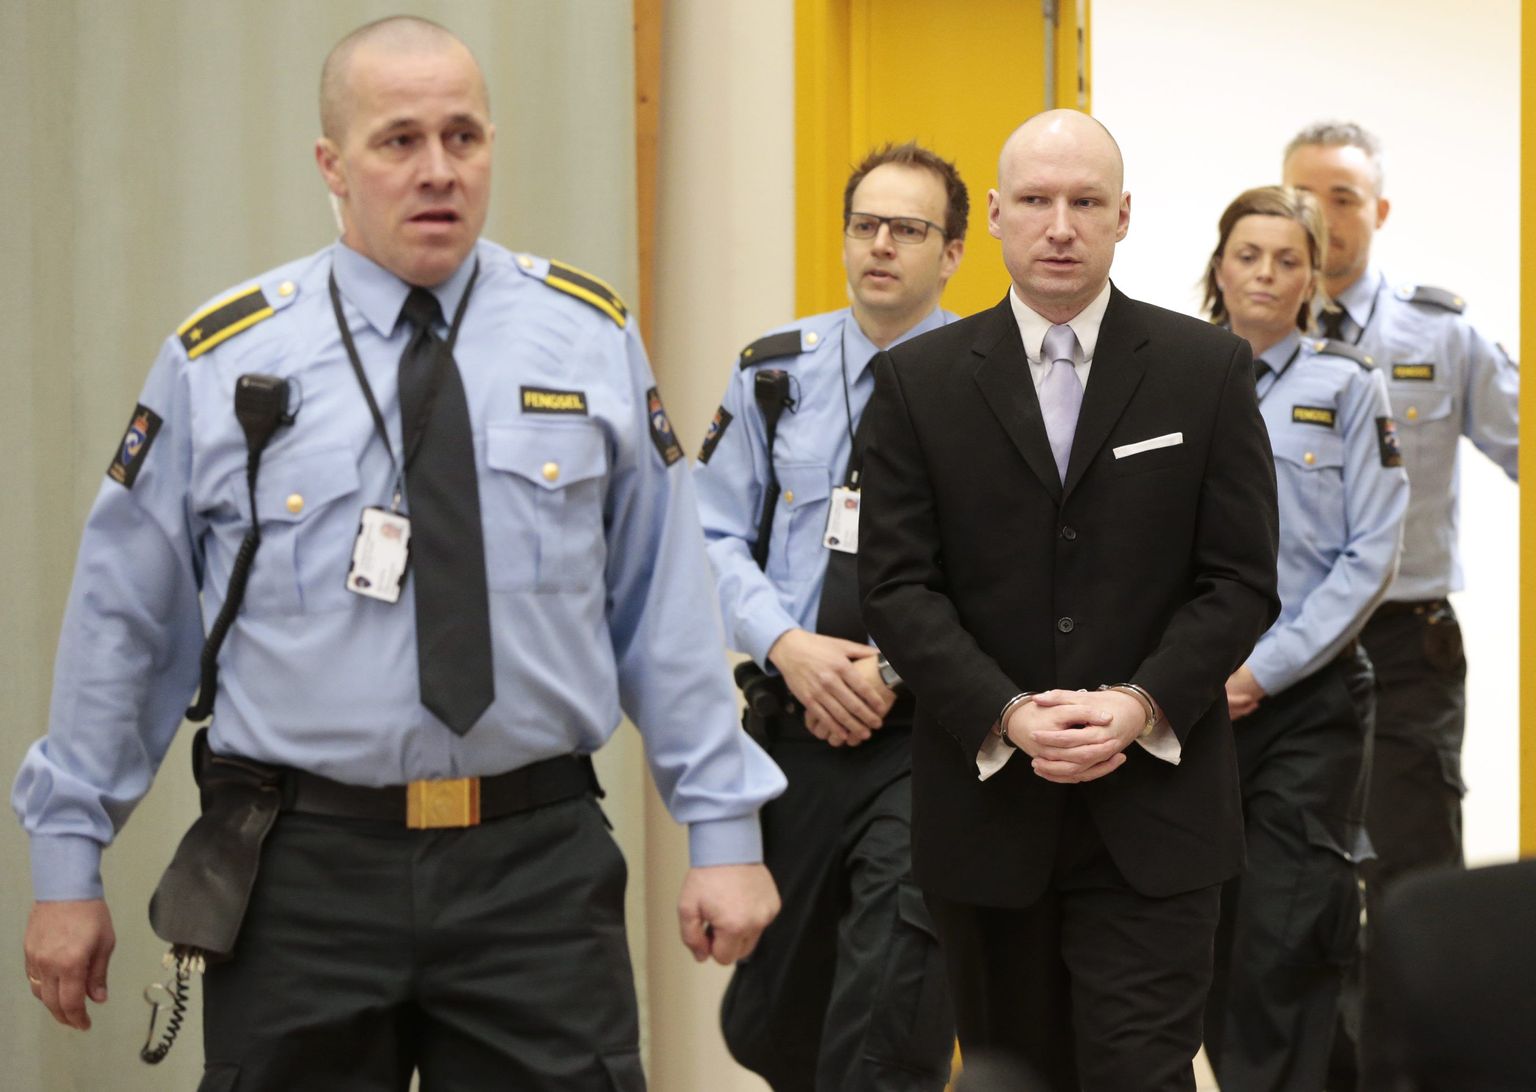 Massimõrvar Anders Behring Breivik.